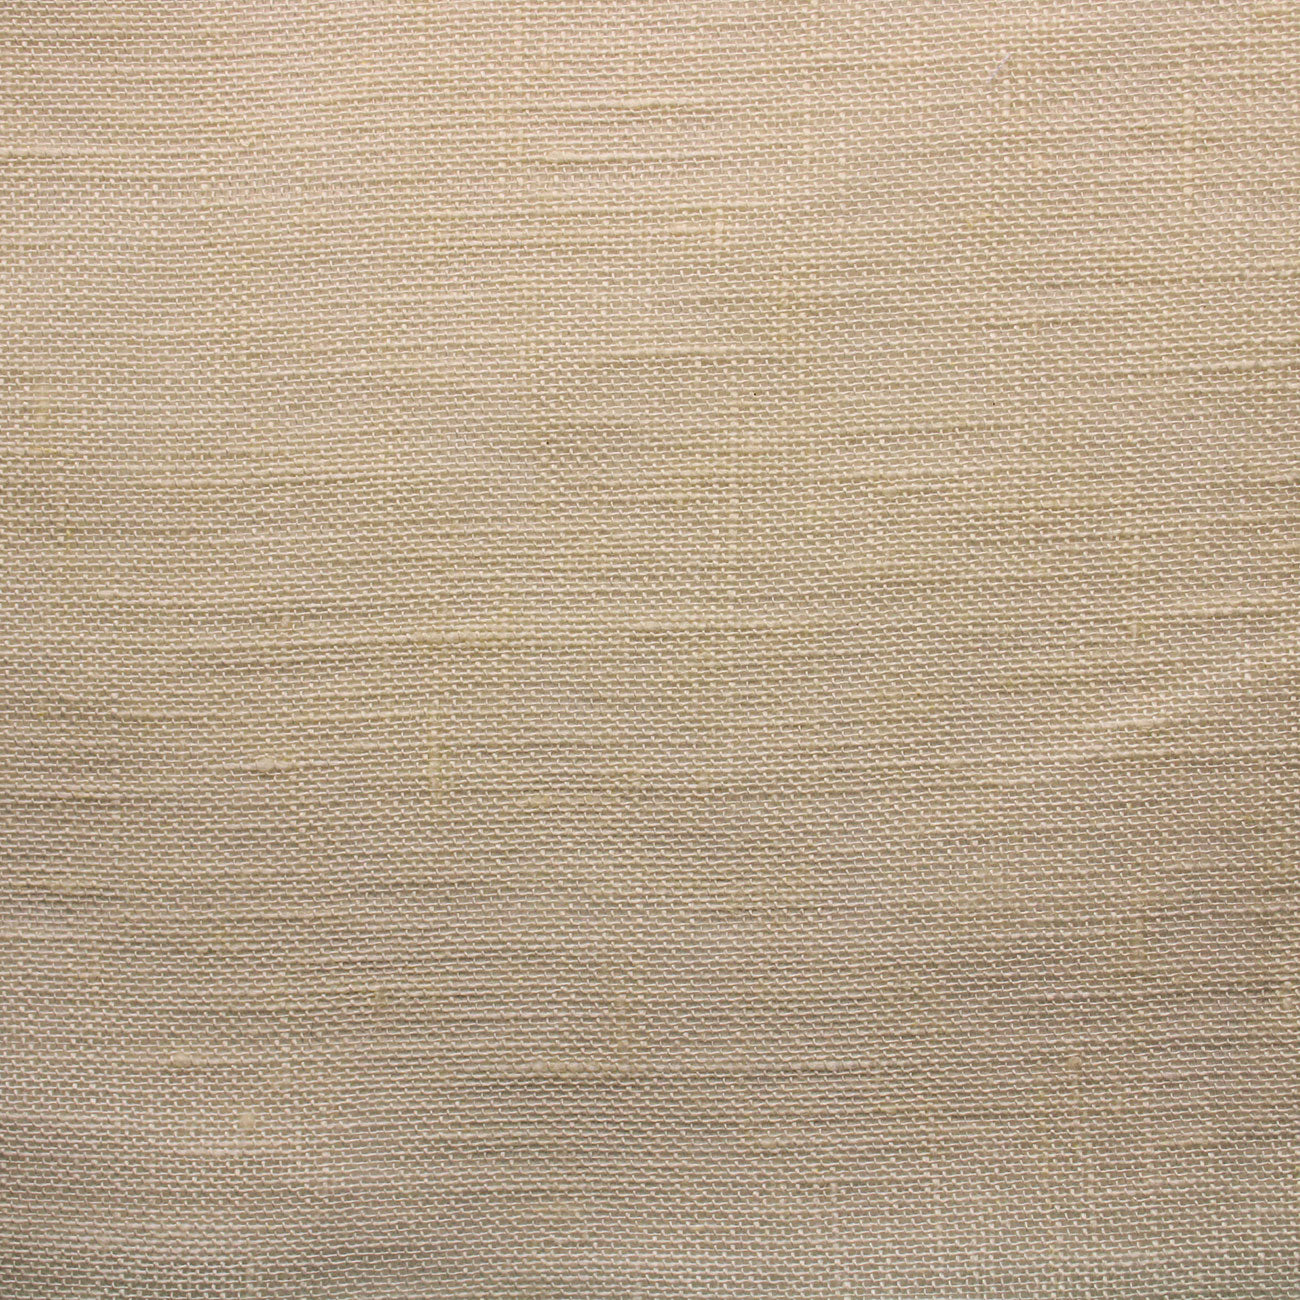 India Linen